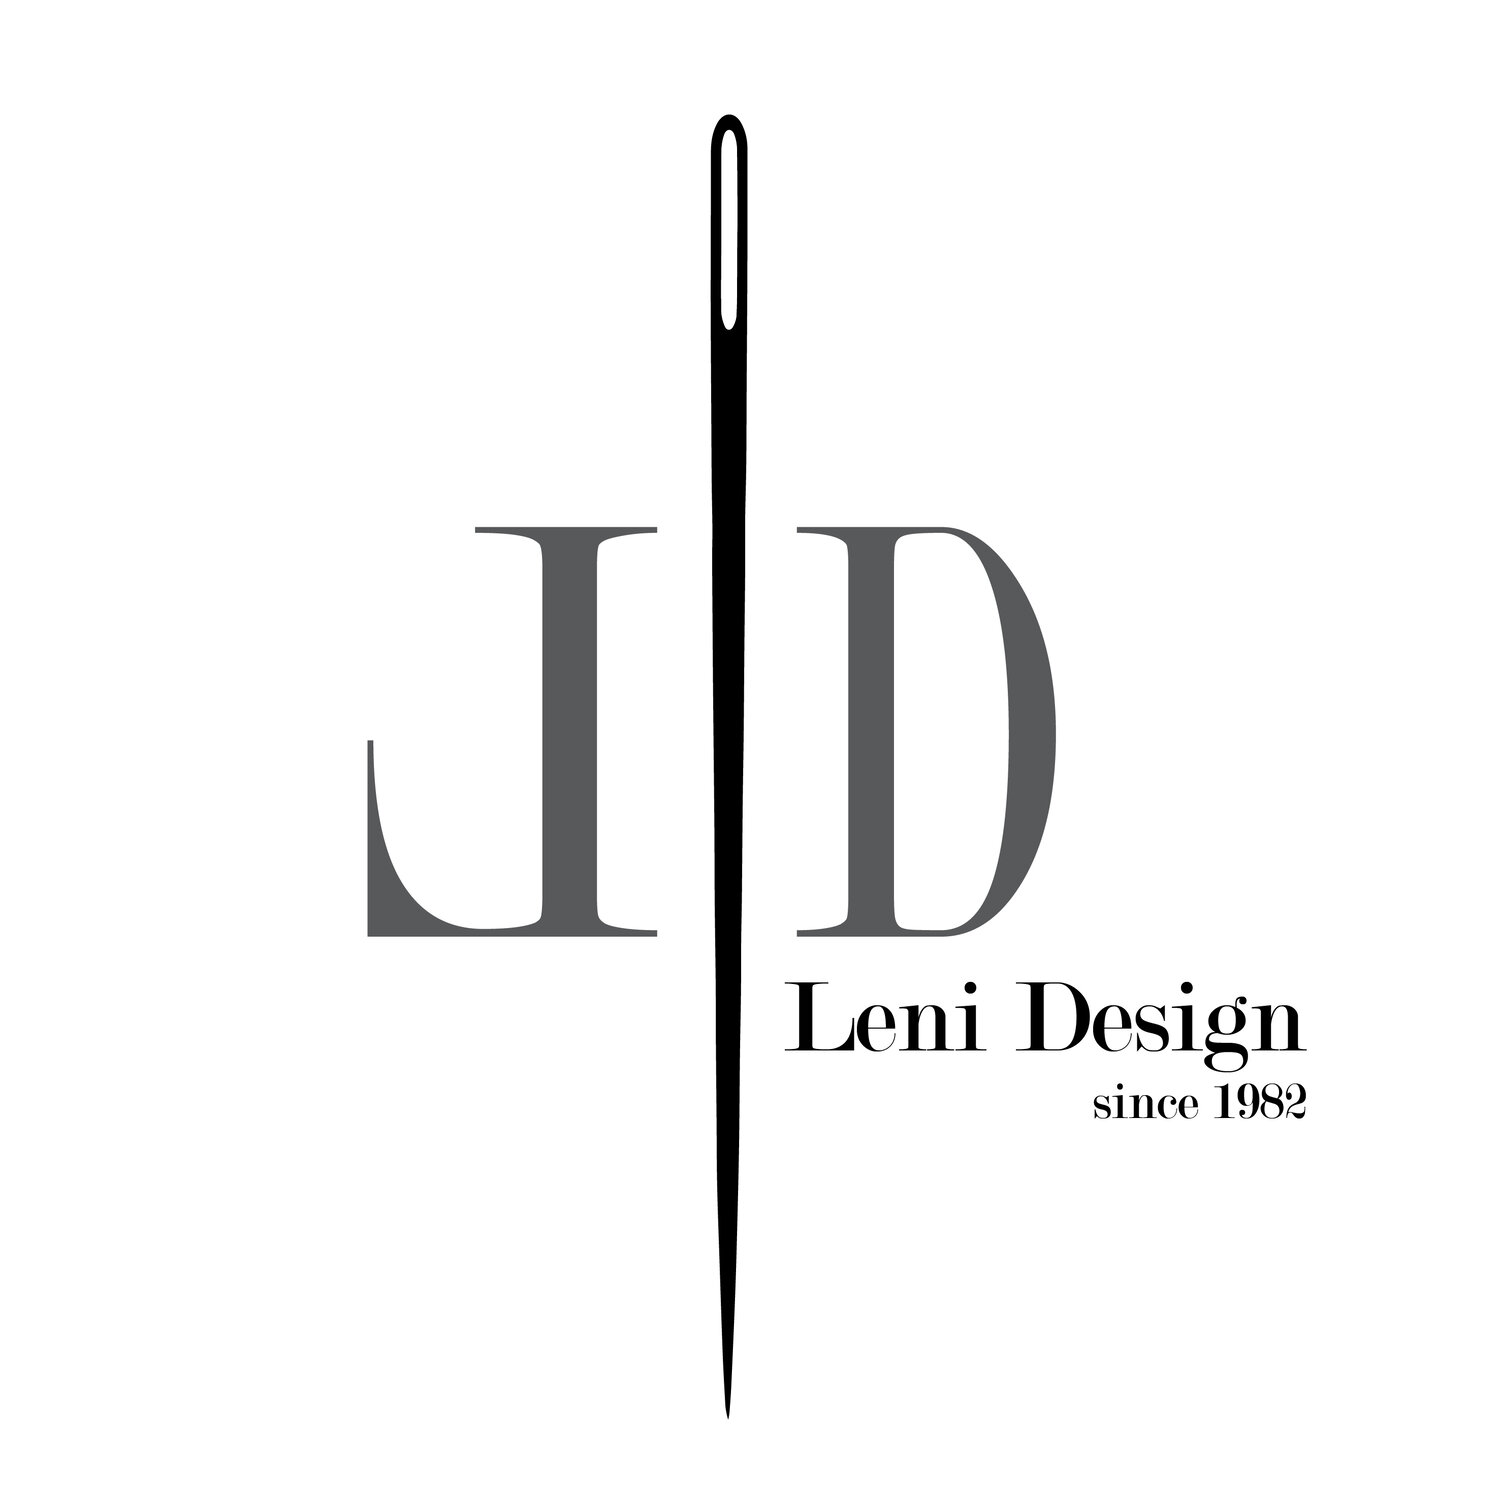 Leni Design